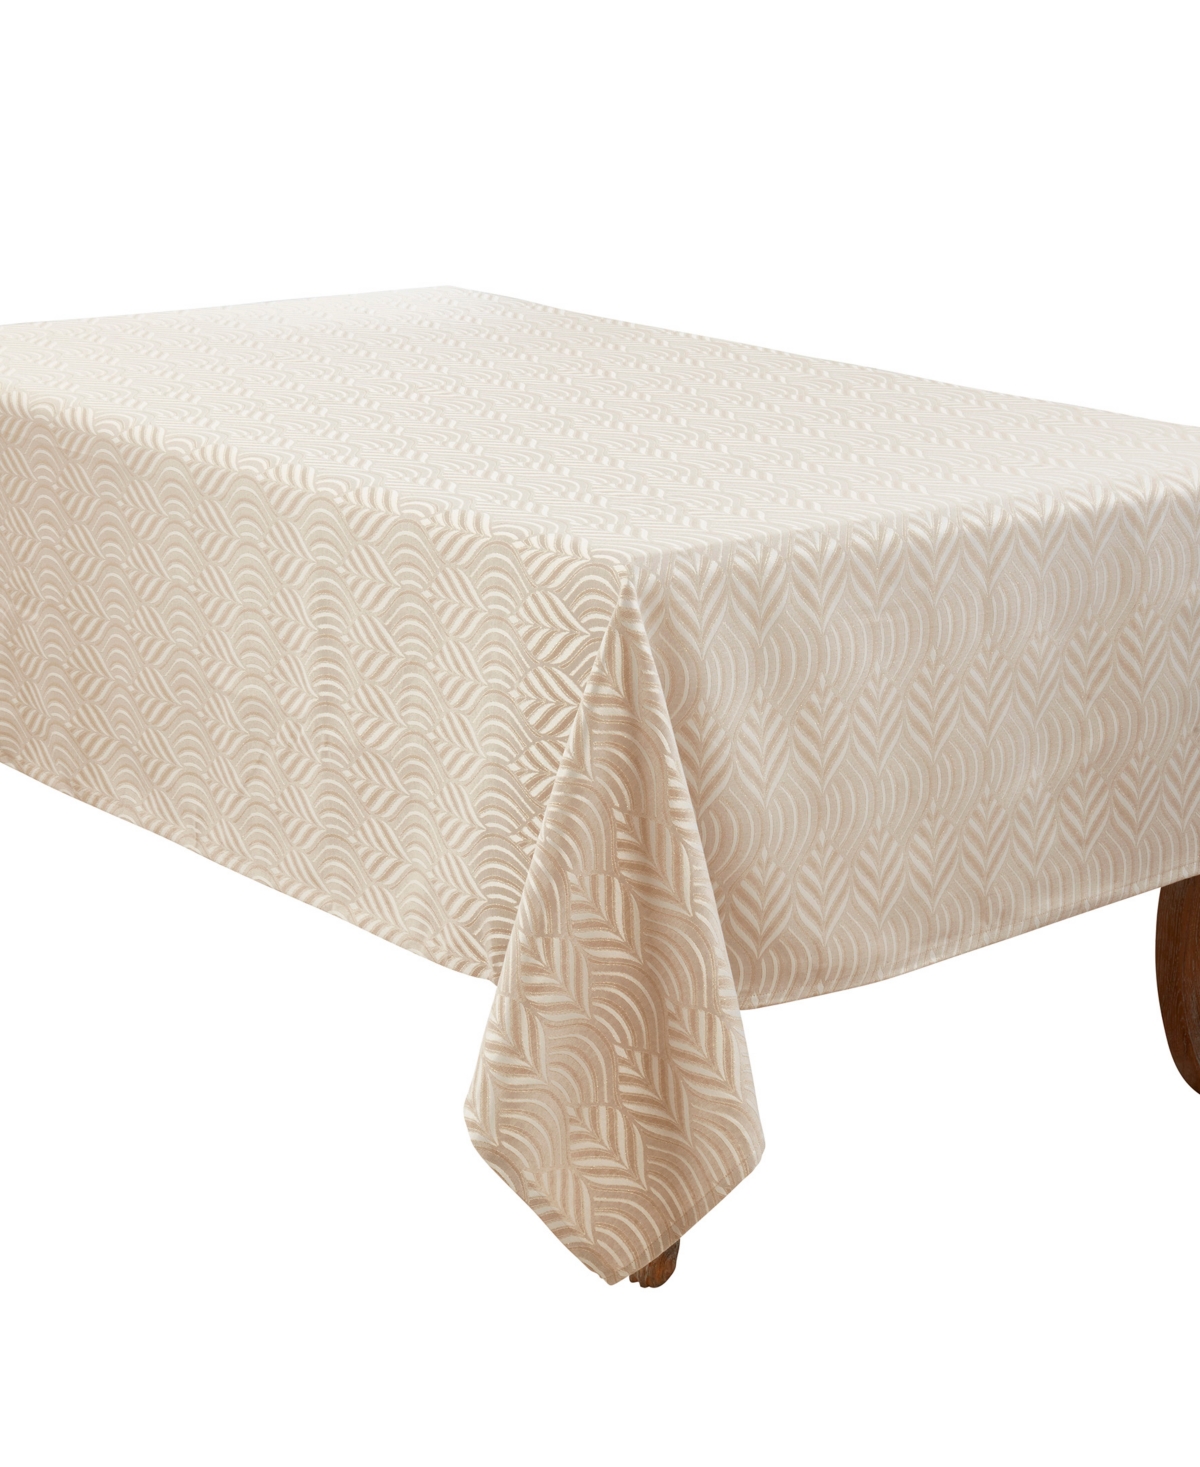 Saro Lifestyle Exquisite Jacquard Design Tablecloth, 72"x120" In Gray